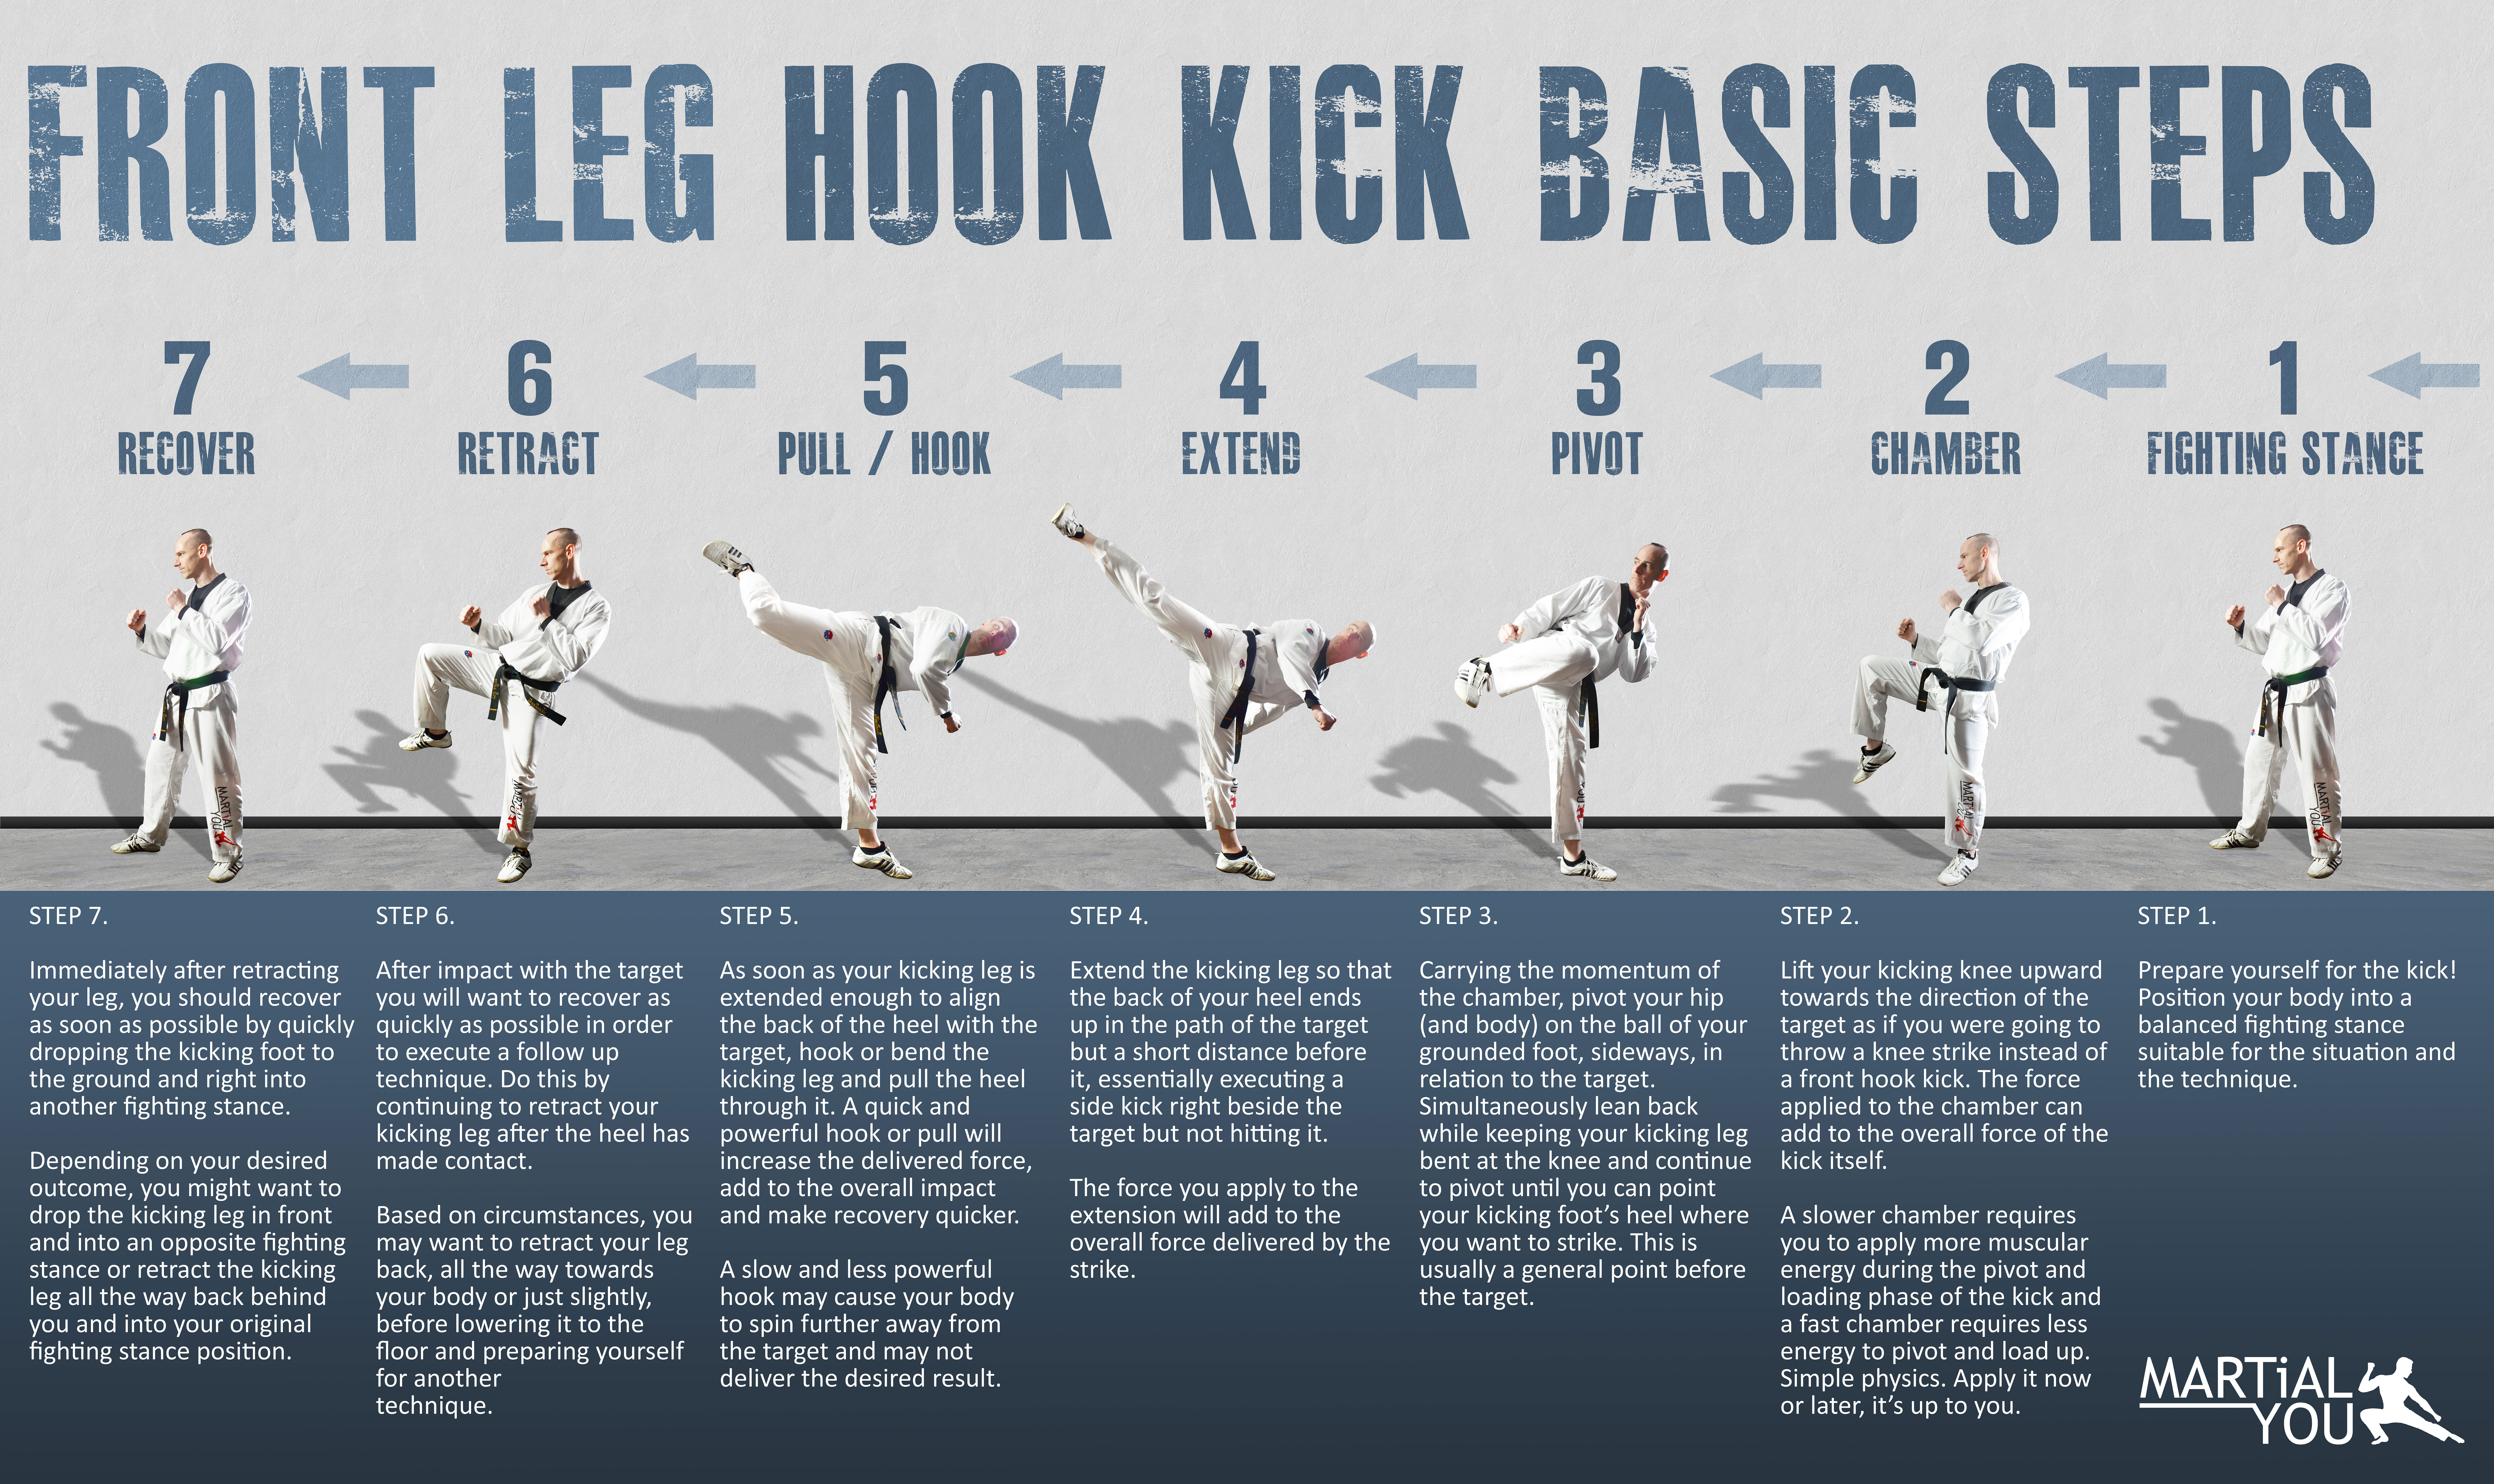 https://www.martialyou.com/forms/Front-Leg-Hook-Kick-Guide-Poster-7Steps-8192x4876.jpg